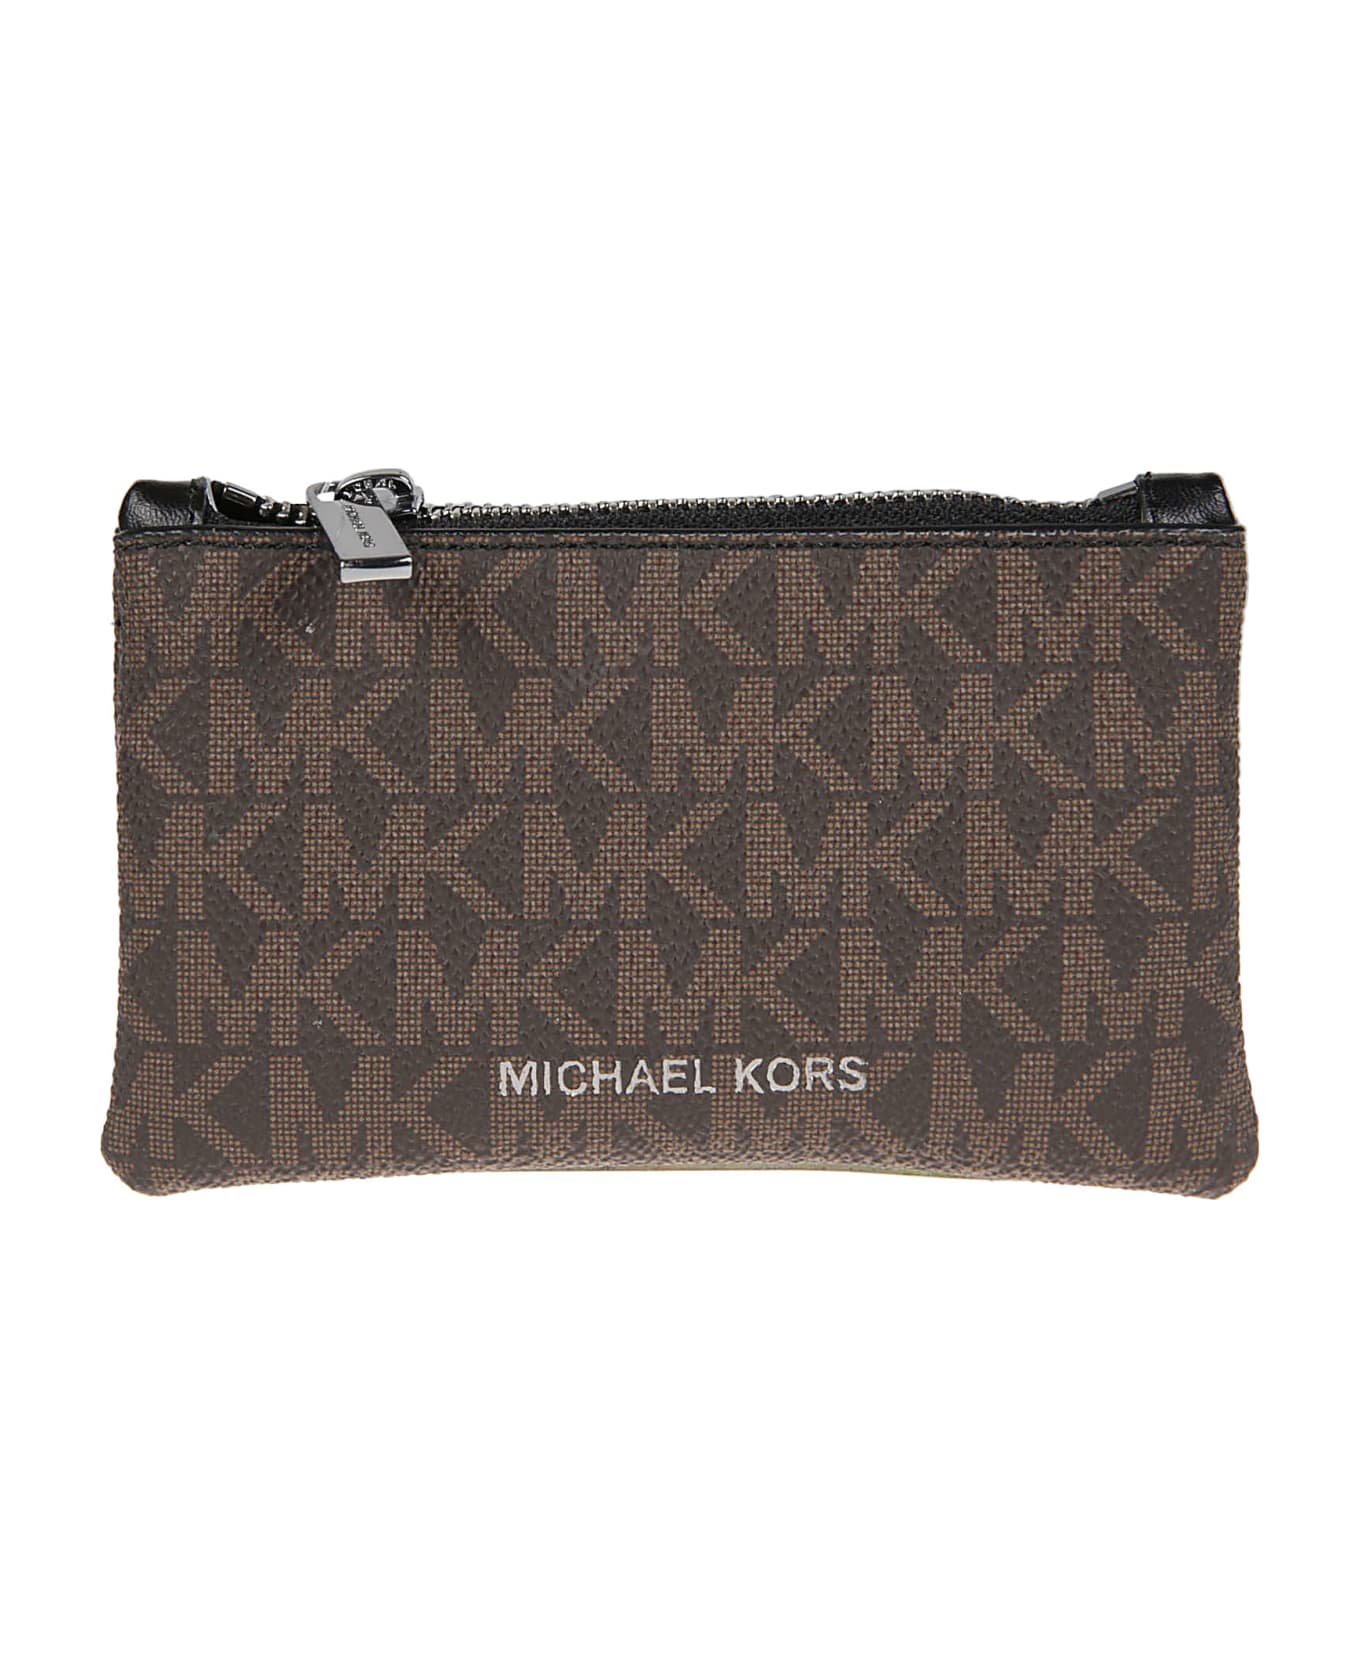 Michael Kors Coin Wallet - Brown/black